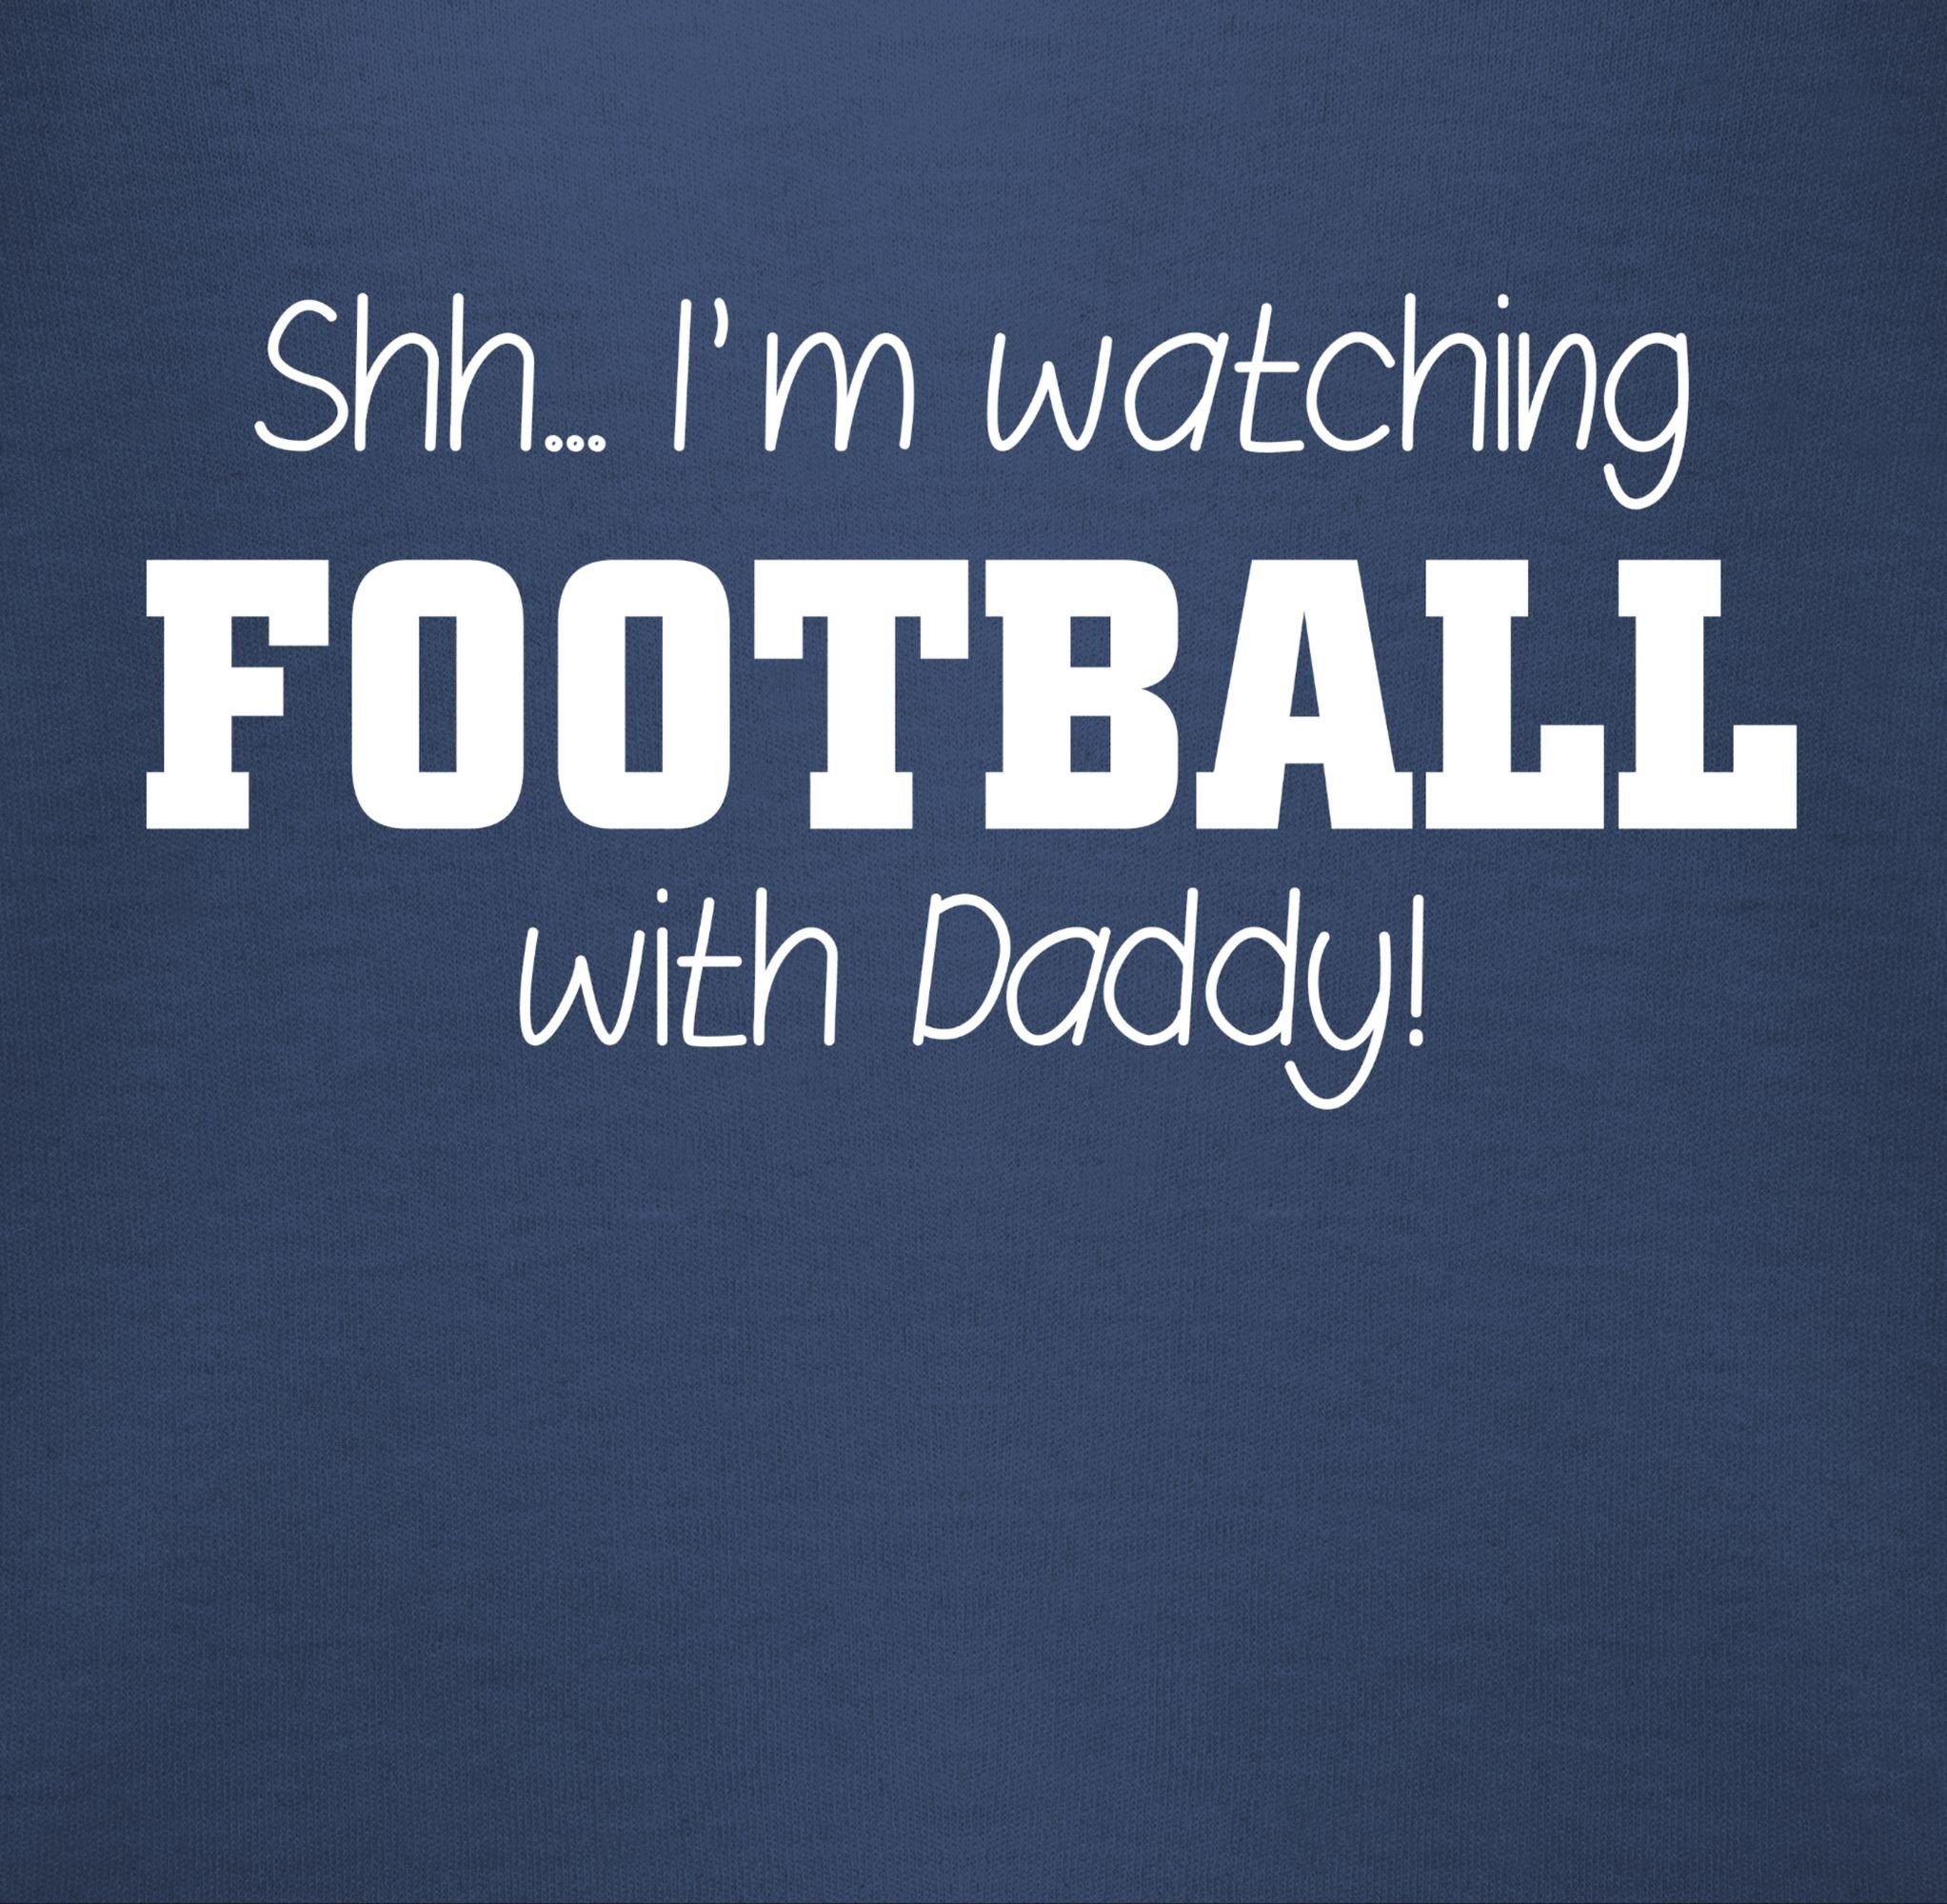 weiß Sport Blau Shh...I'm football Baby 2 with Daddy! & Bewegung - watching Shirtracer Shirtbody Navy